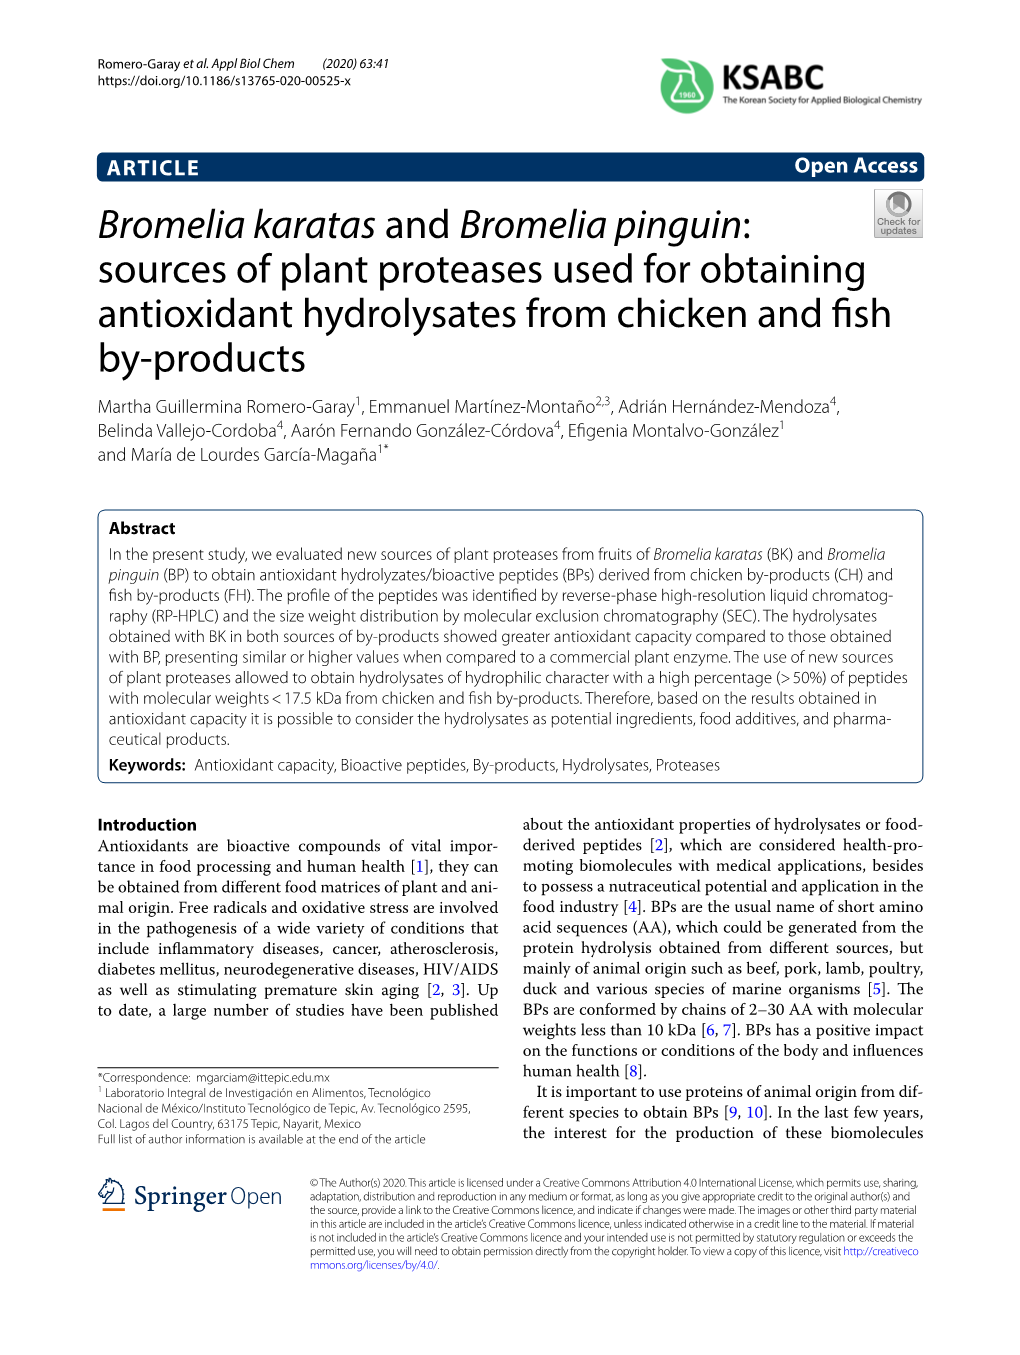 Bromelia Karatas and Bromelia Pinguin: Sources of Plant Proteases